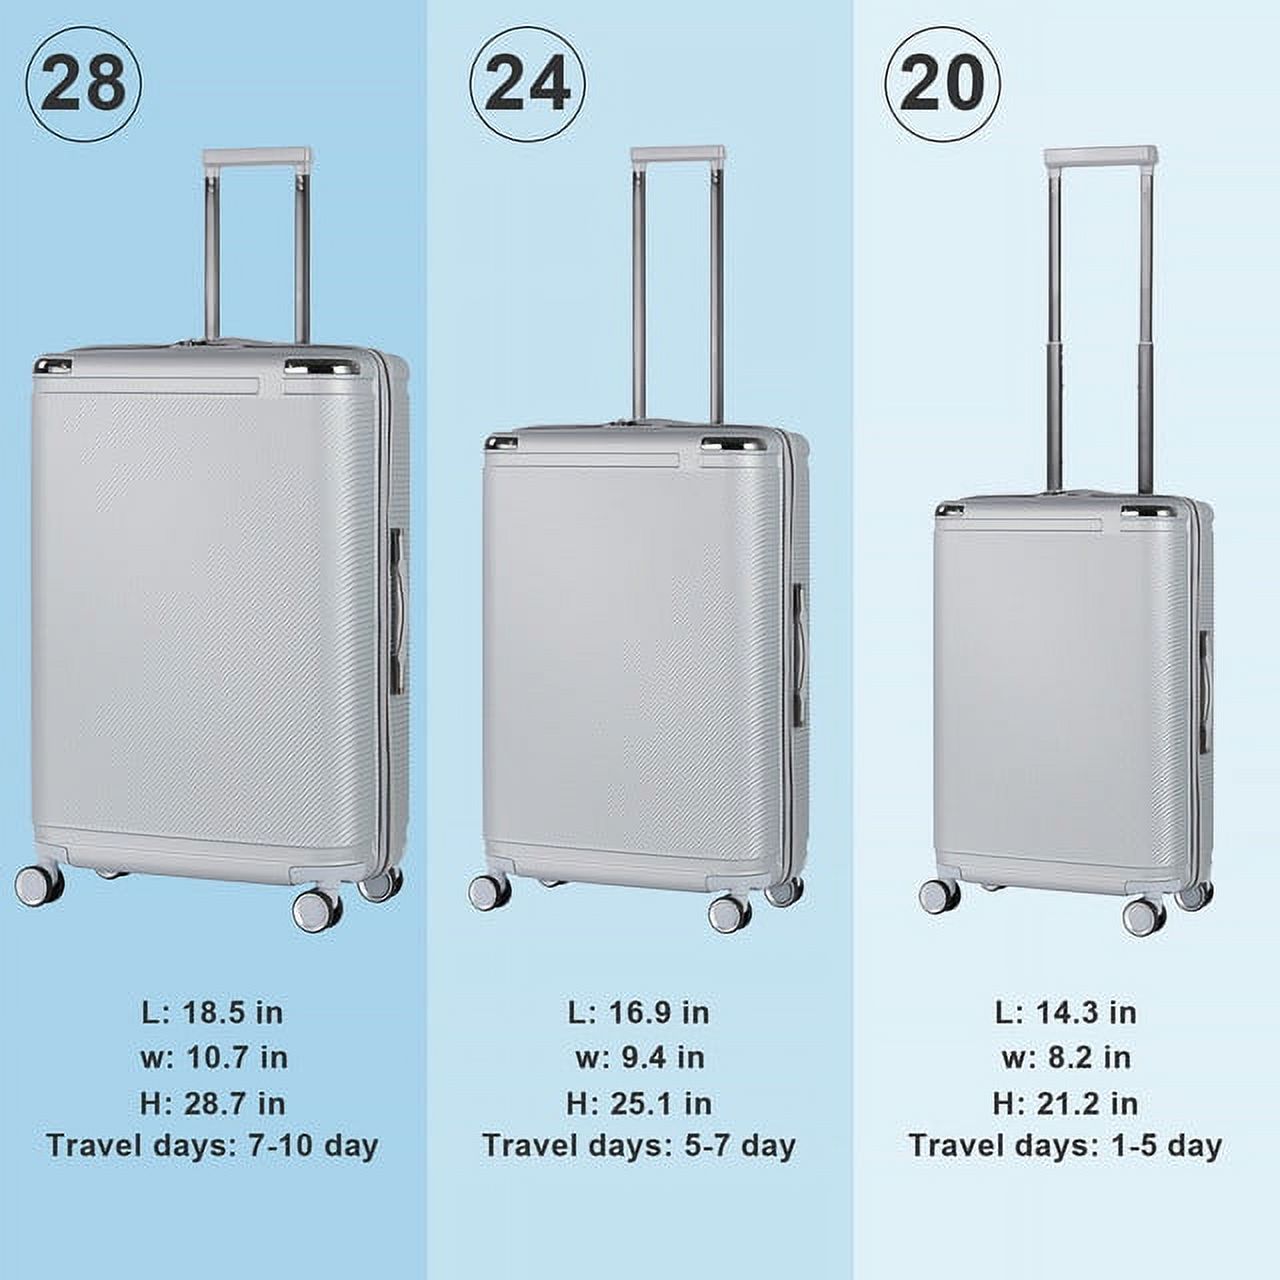 Hikolayae Dorado Collection Hardside Spinner Luggage Sets in Silver, 3 Piece - TSA Lock - image 5 of 9